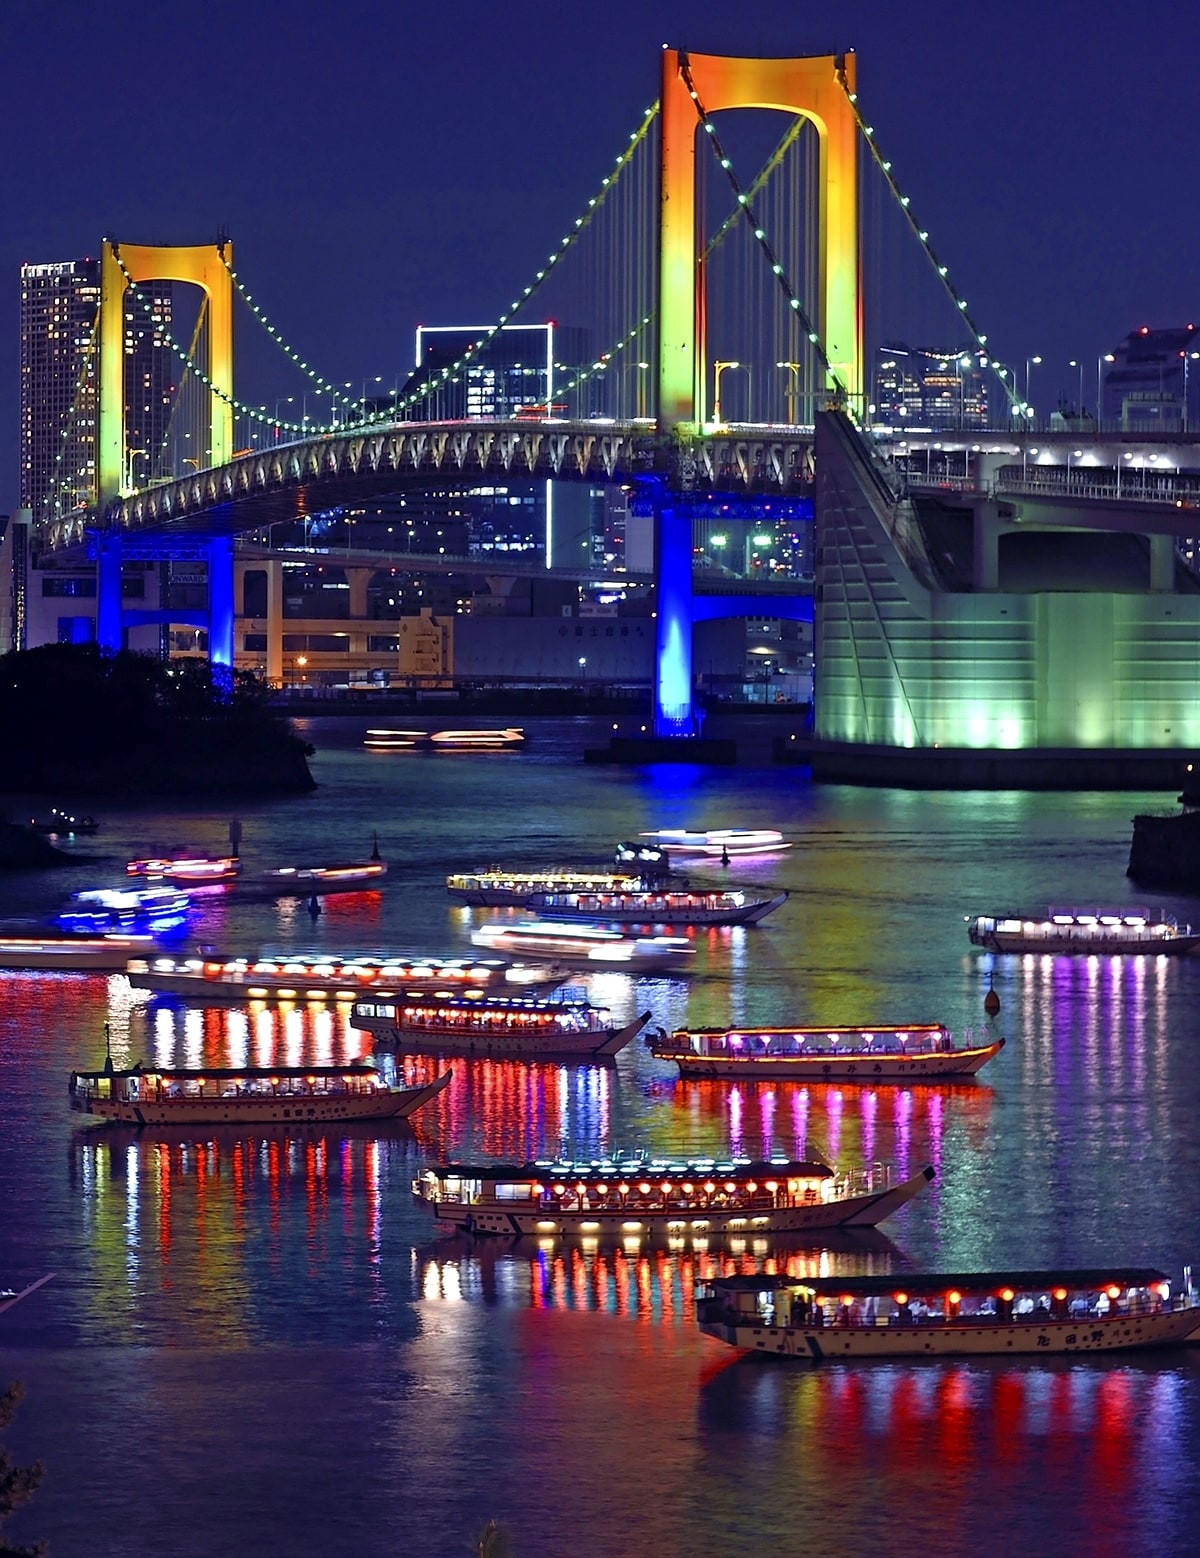 cruise river tokyo